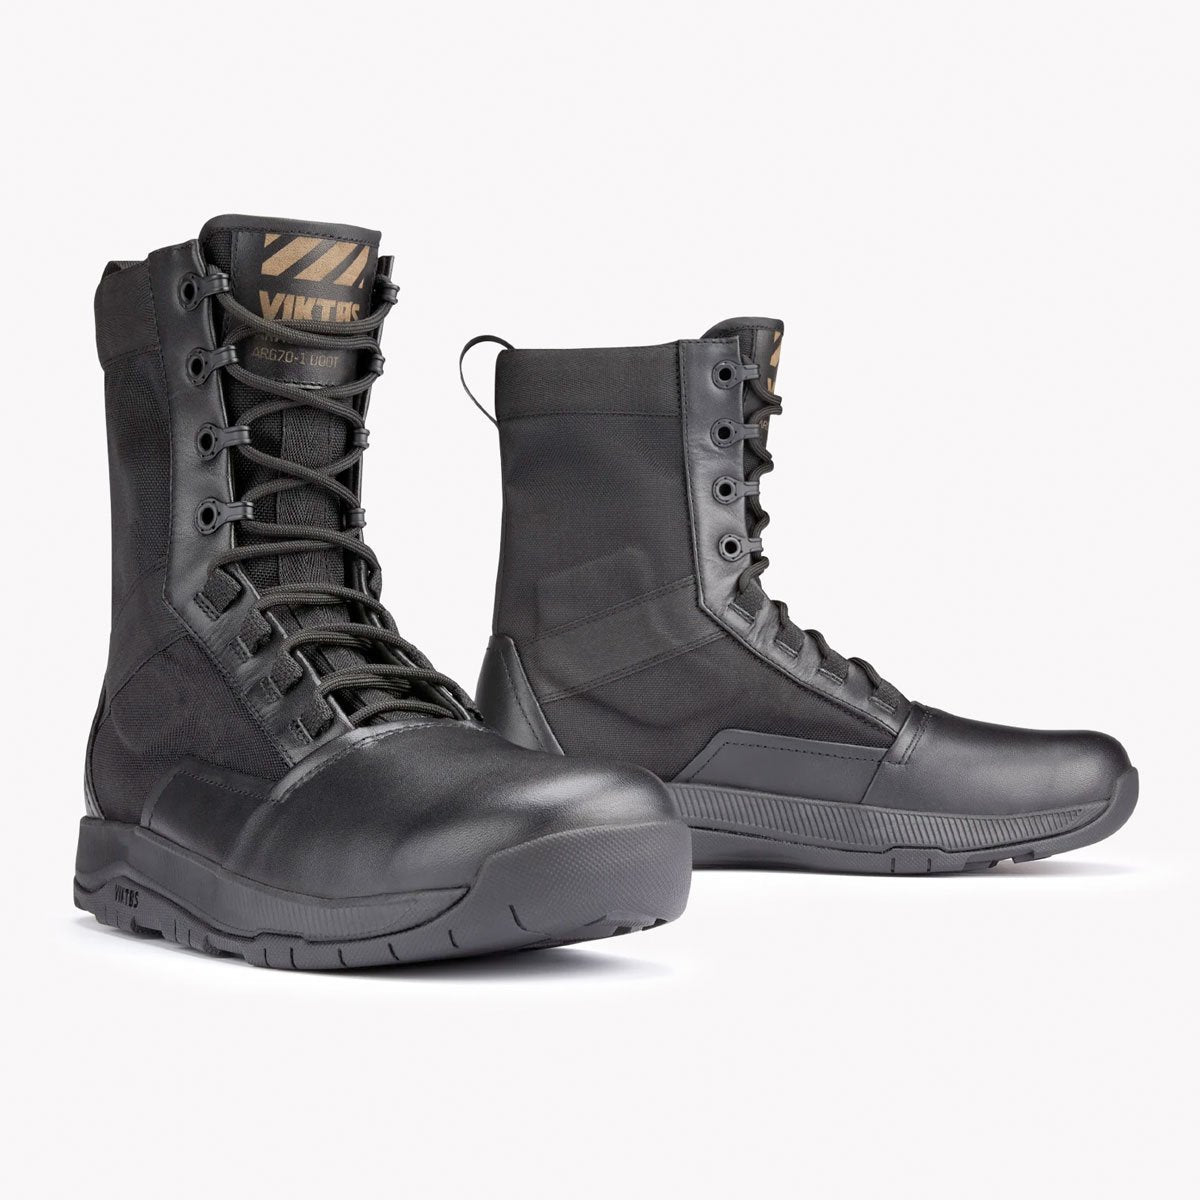 VIKTOS Armory AR670 Safety Composite Toe Boot Black Footwear VIKTOS Tactical Gear Supplier Tactical Distributors Australia